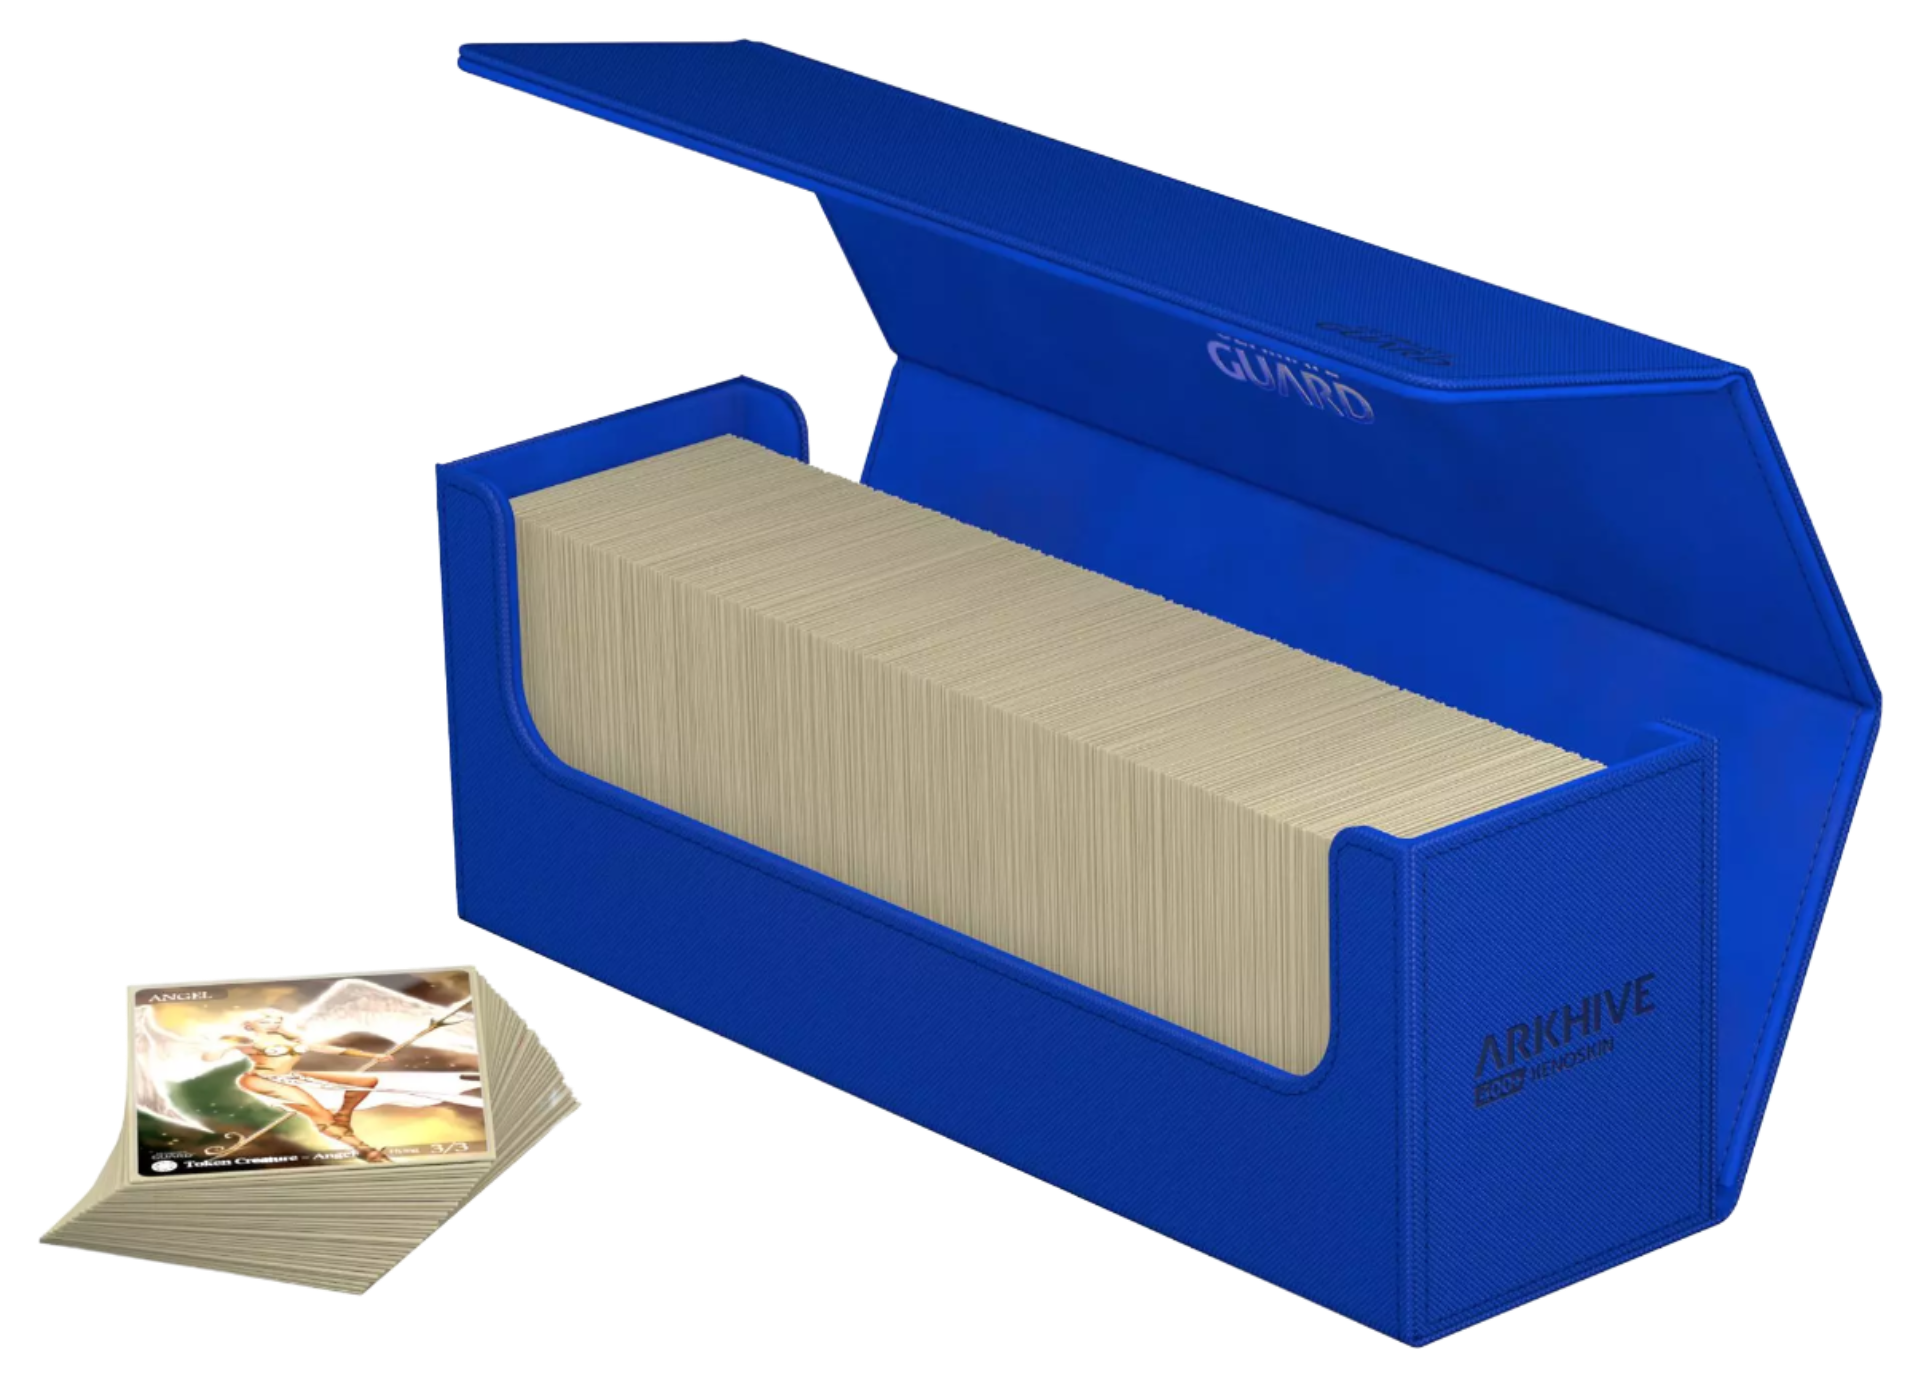 Ultimate Guard - Arkhive XenoSkin - 400+ Card Case - Monocolor Blue